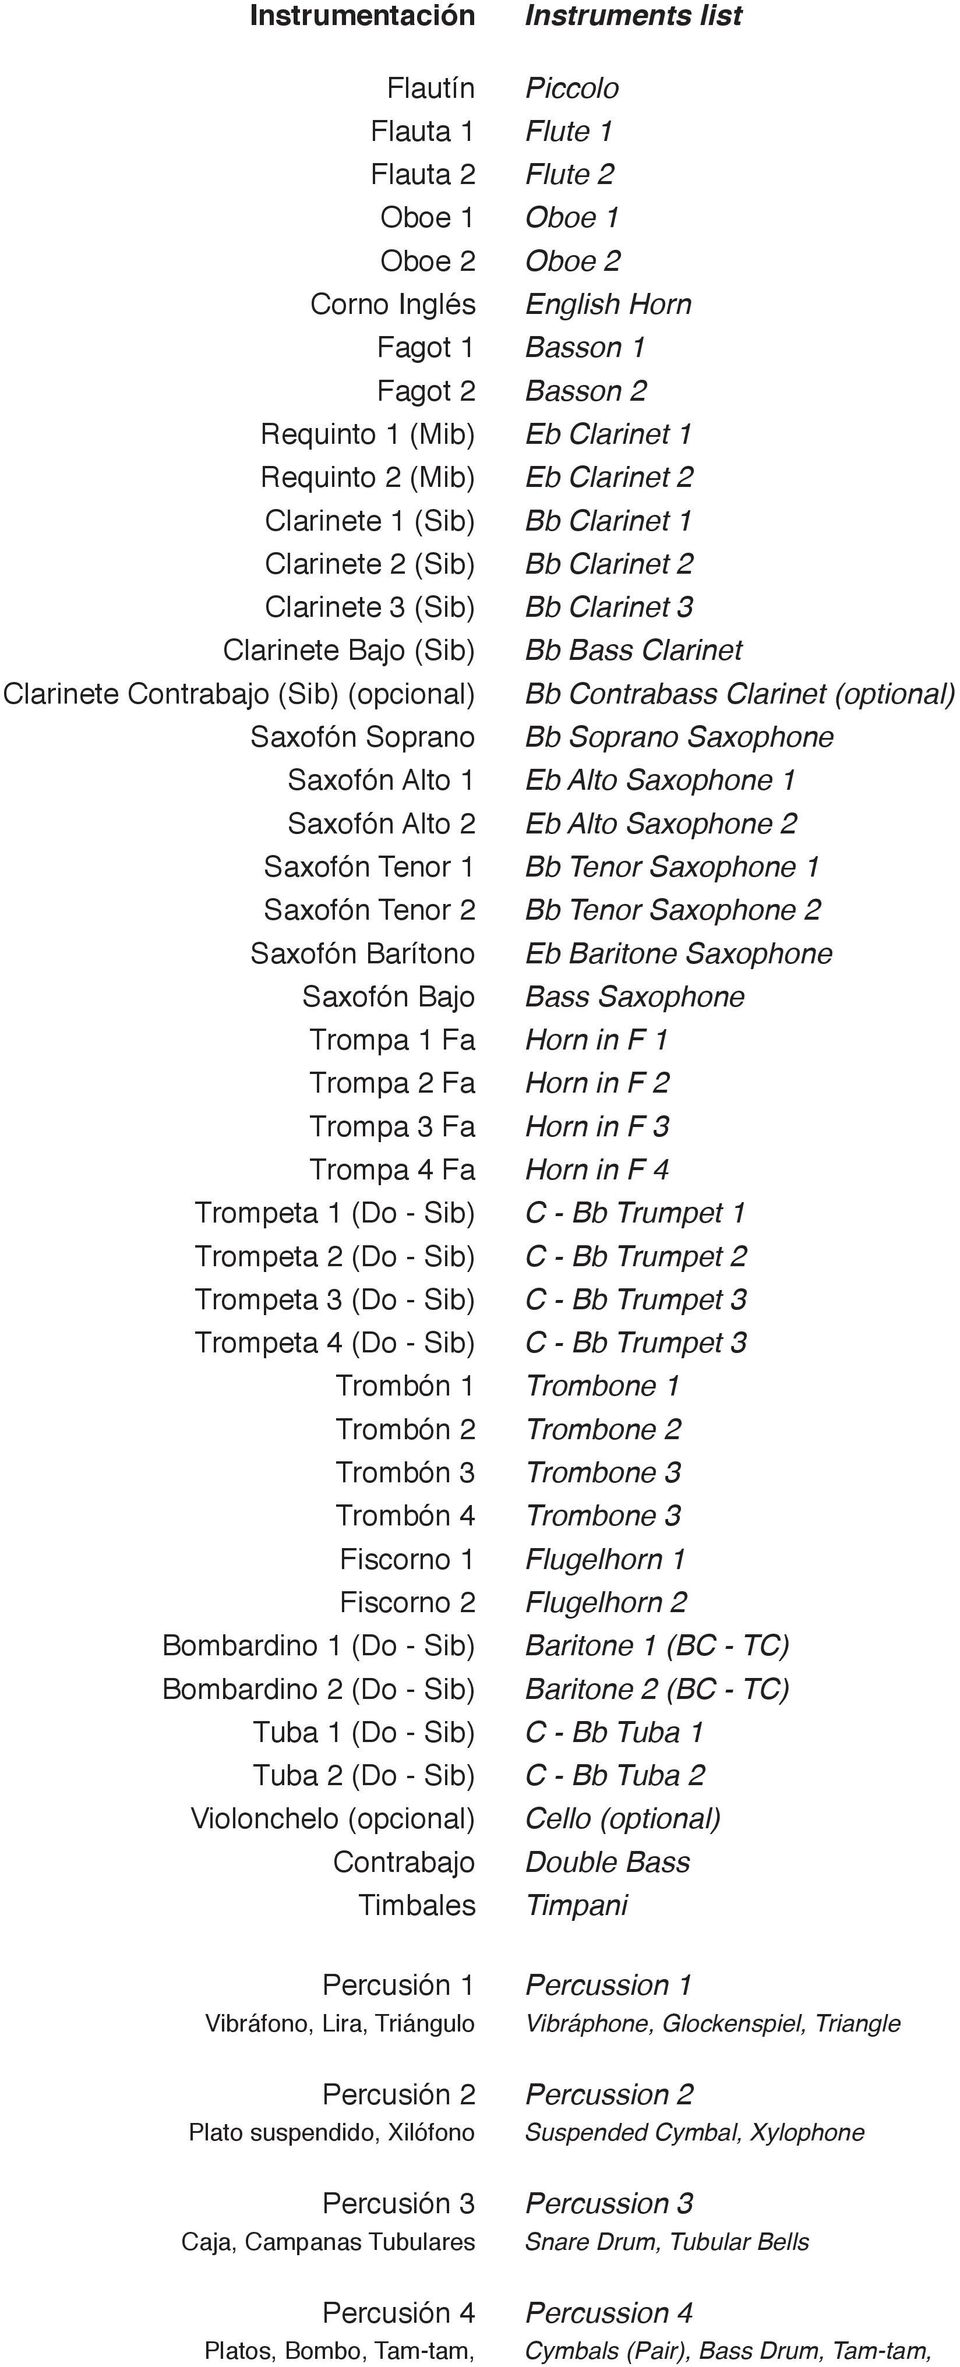 Trompeta 1 (Do - Sib) Trompeta 2 (Do - Sib) Trompeta 3 (Do - Sib) Trompeta 4 (Do - Sib) Trombón 1 Trombón 2 Trombón 3 Trombón 4 Fiscorno 1 Fiscorno 2 Bombardino 1 (Do - Sib) Bombardino 2 (Do - Sib)